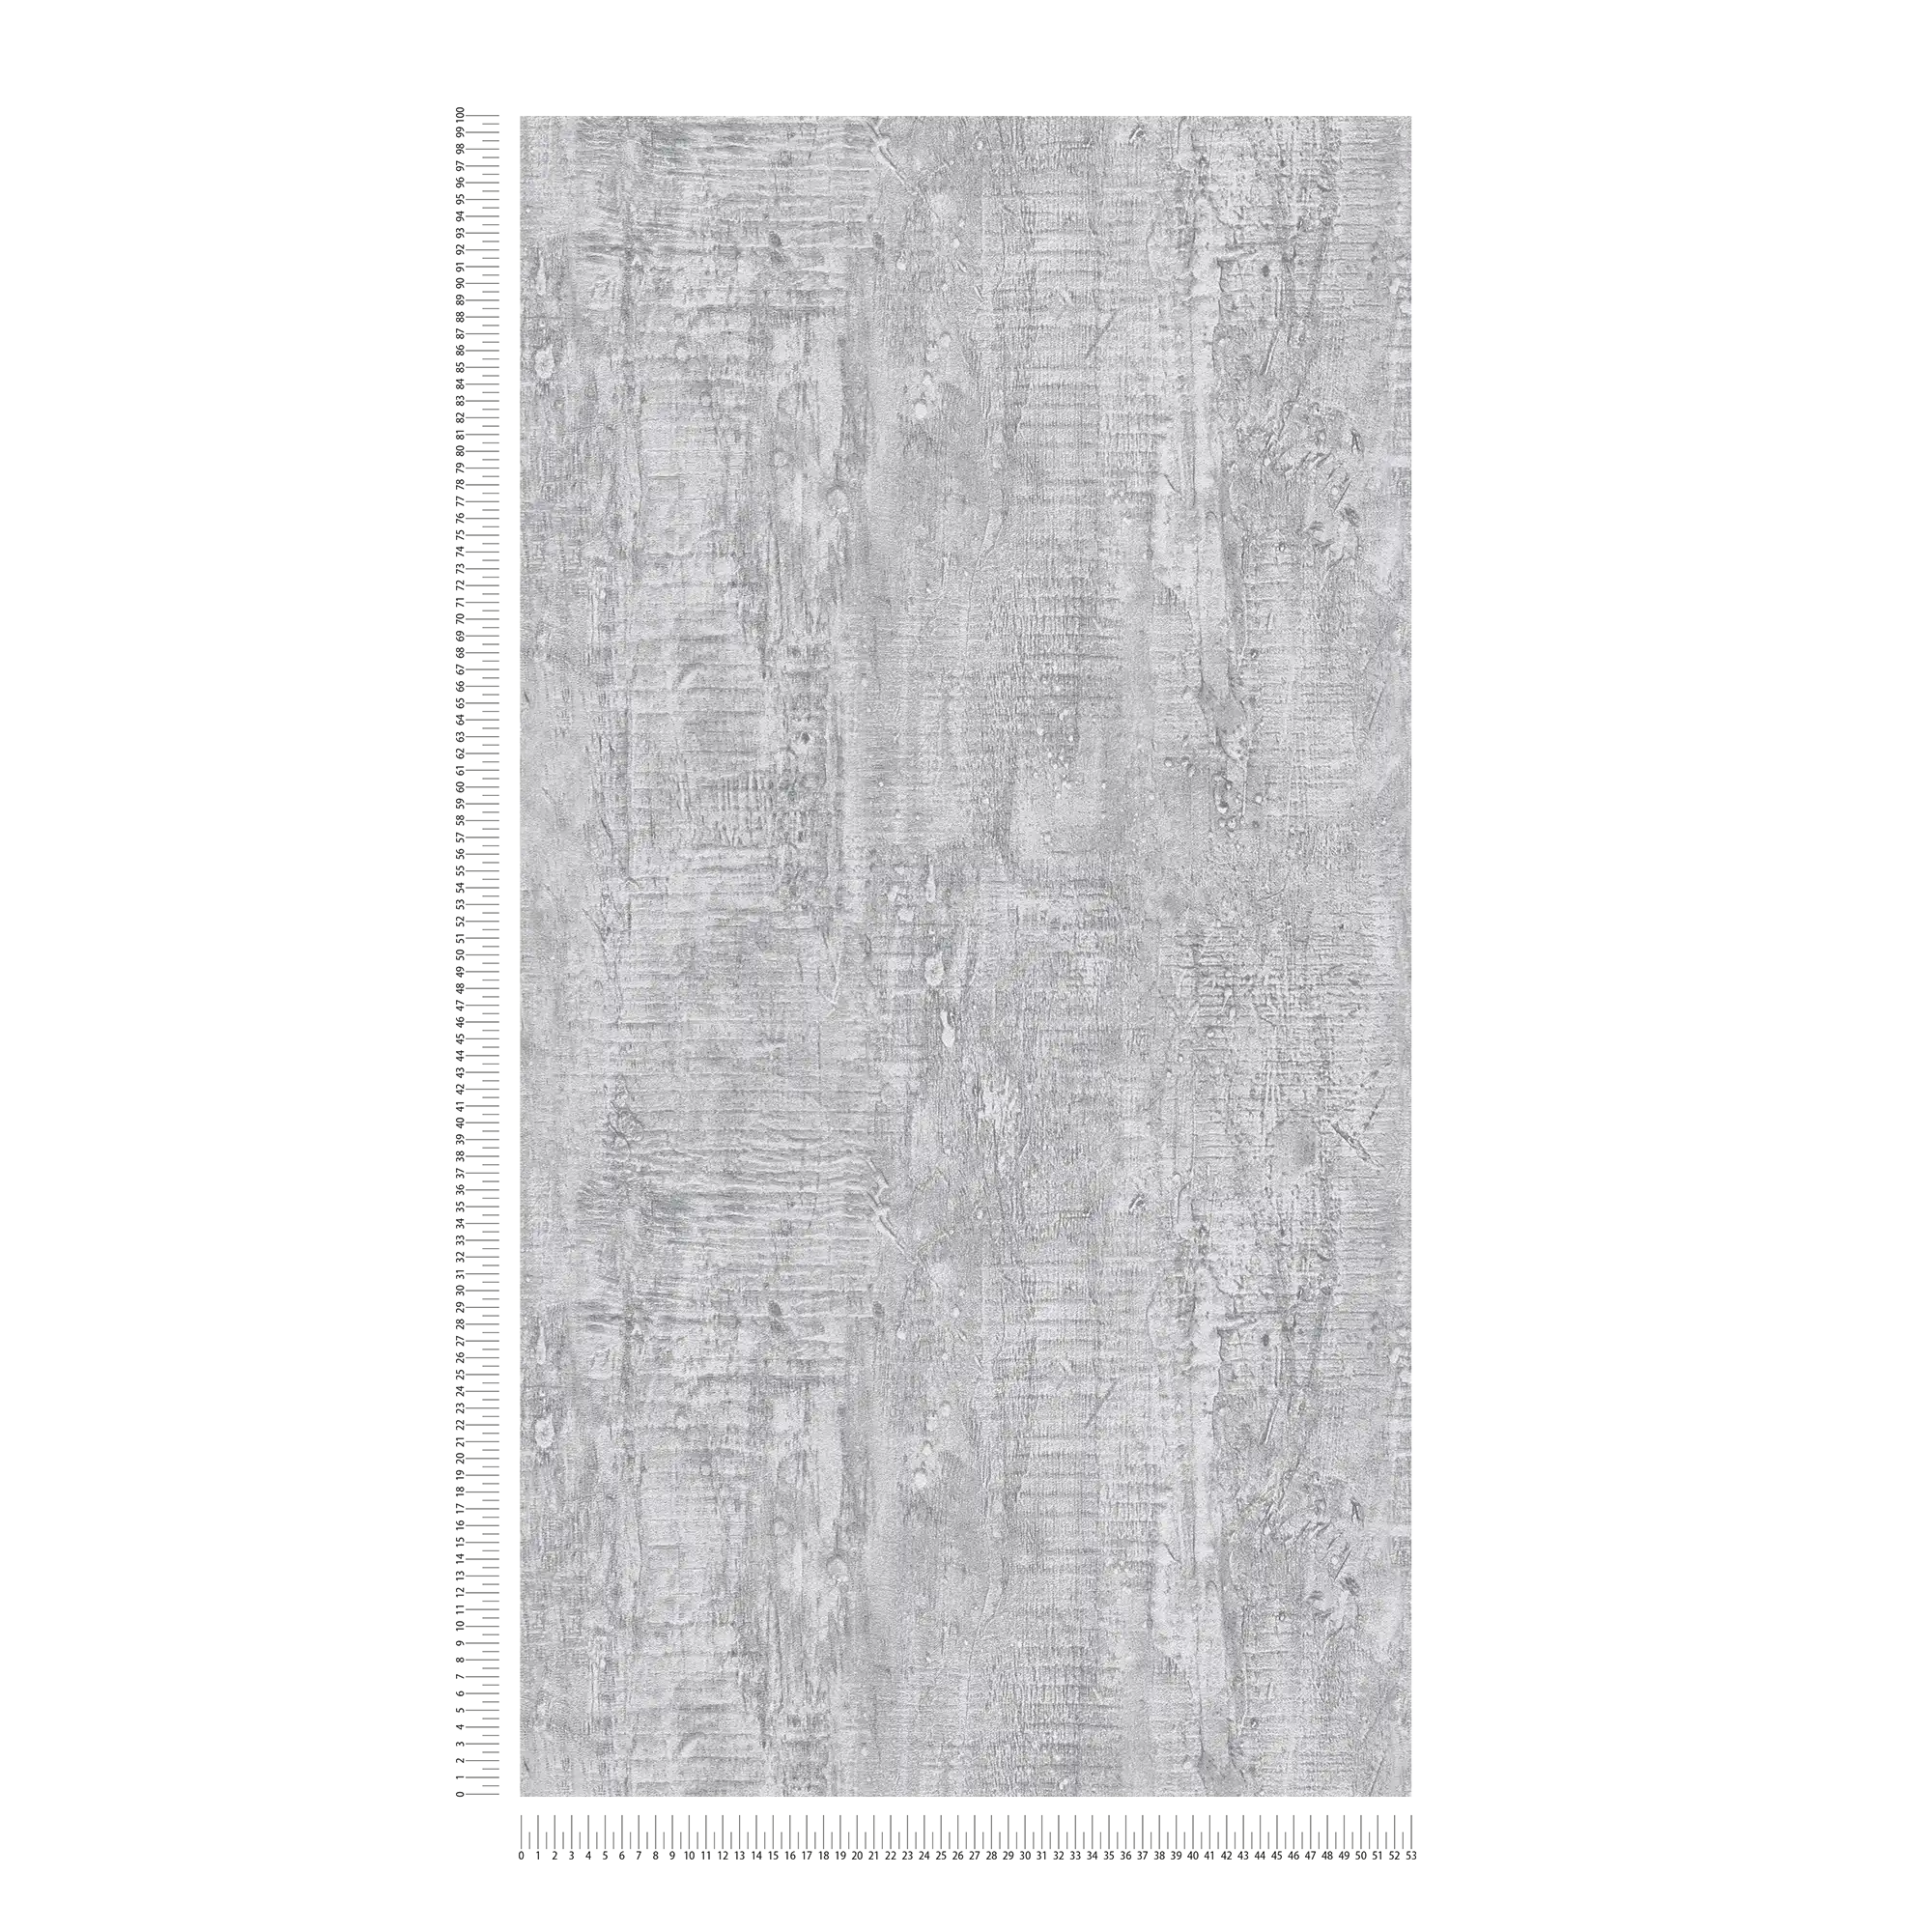             Tapete in rustikaler Betonoptik für Industrielles Design – Grau
        